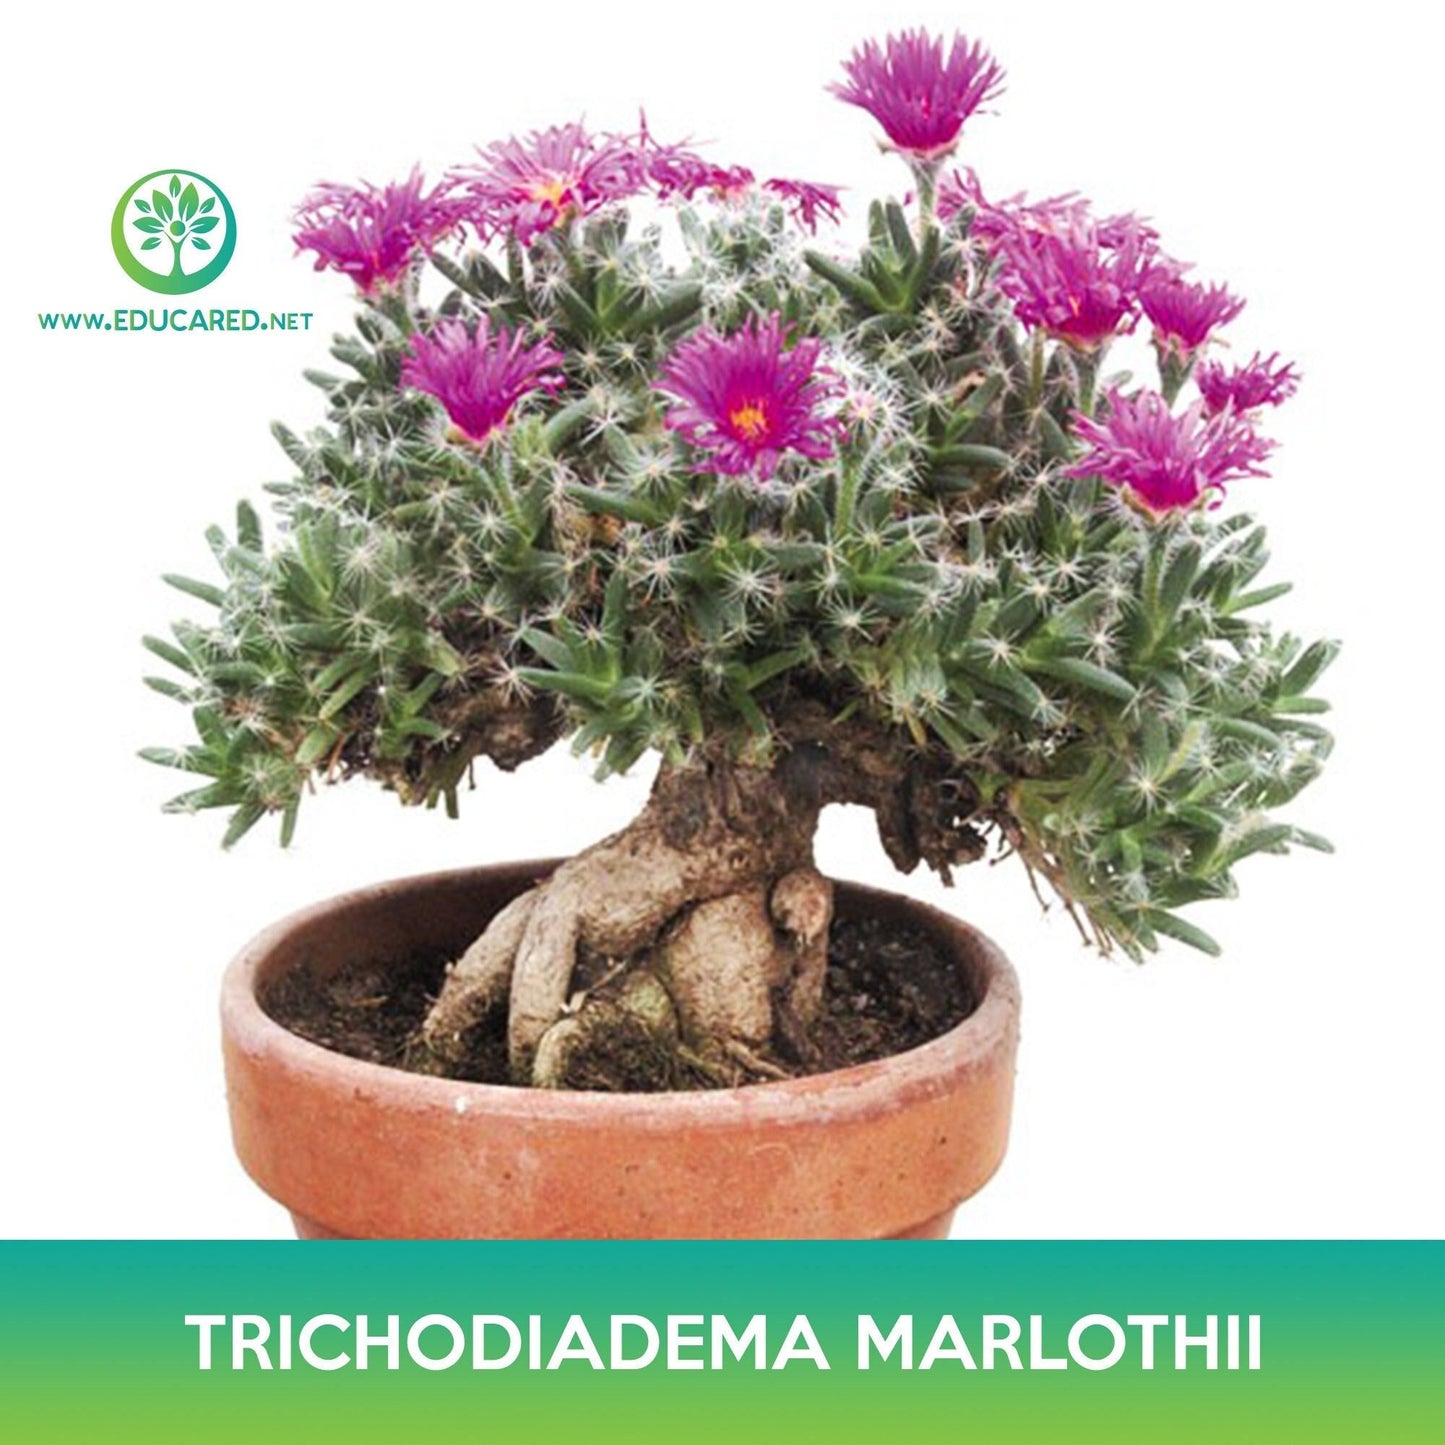 Trichodiadema marlothii Succulent Seed